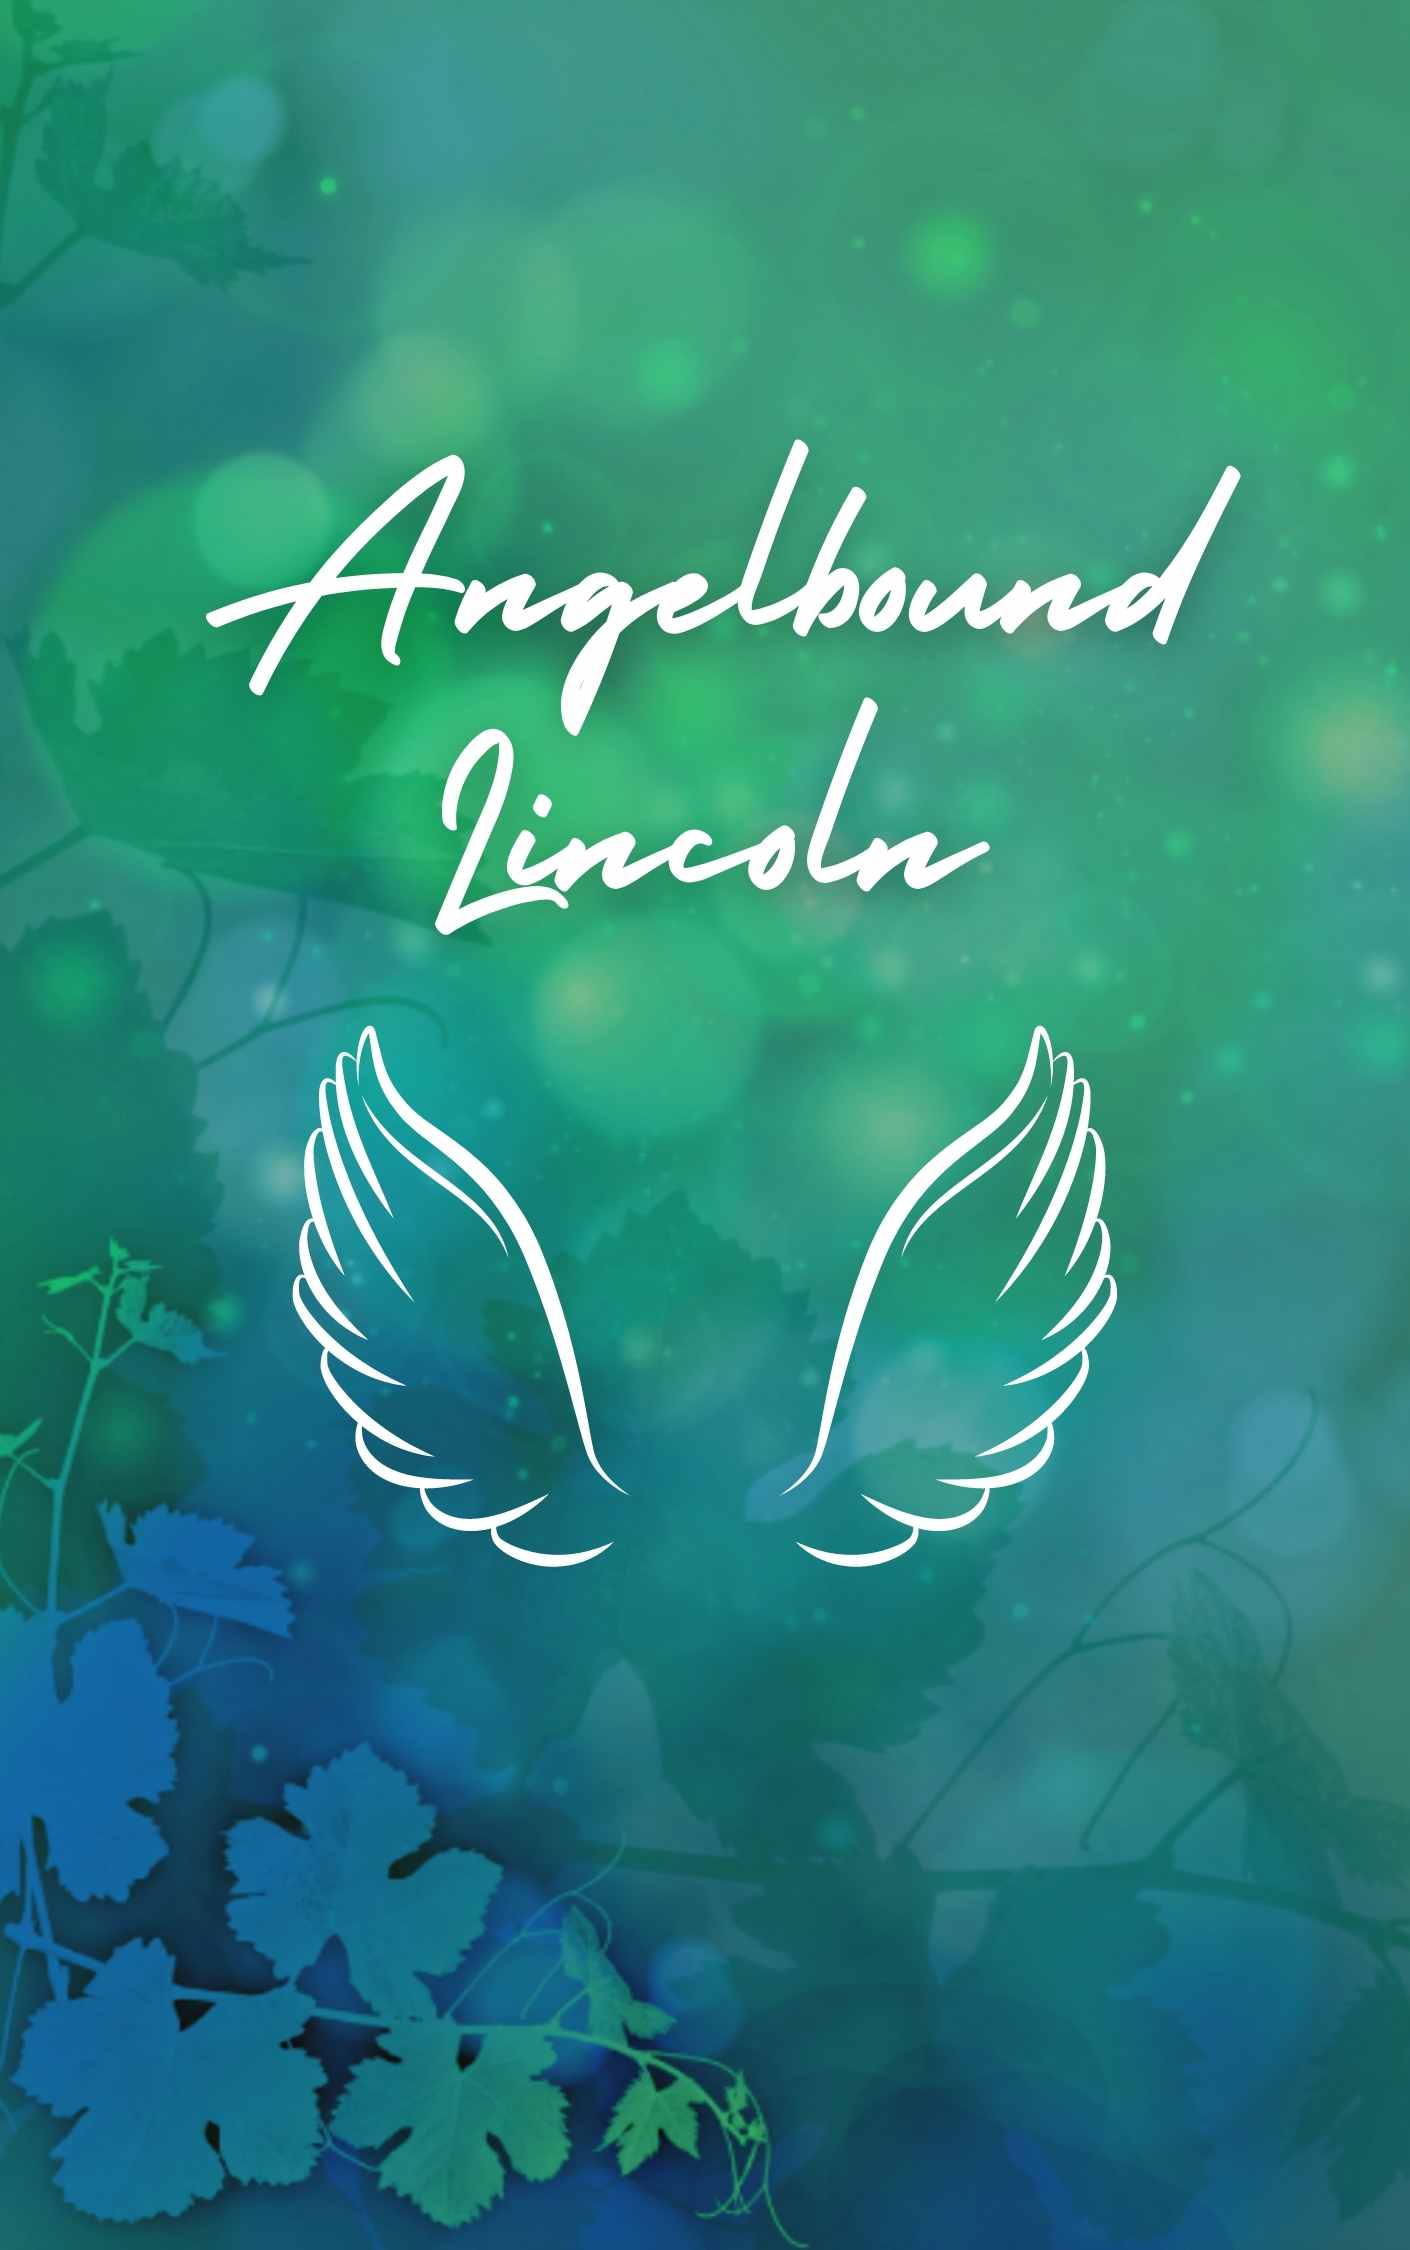 Angelbound Lincoln Series